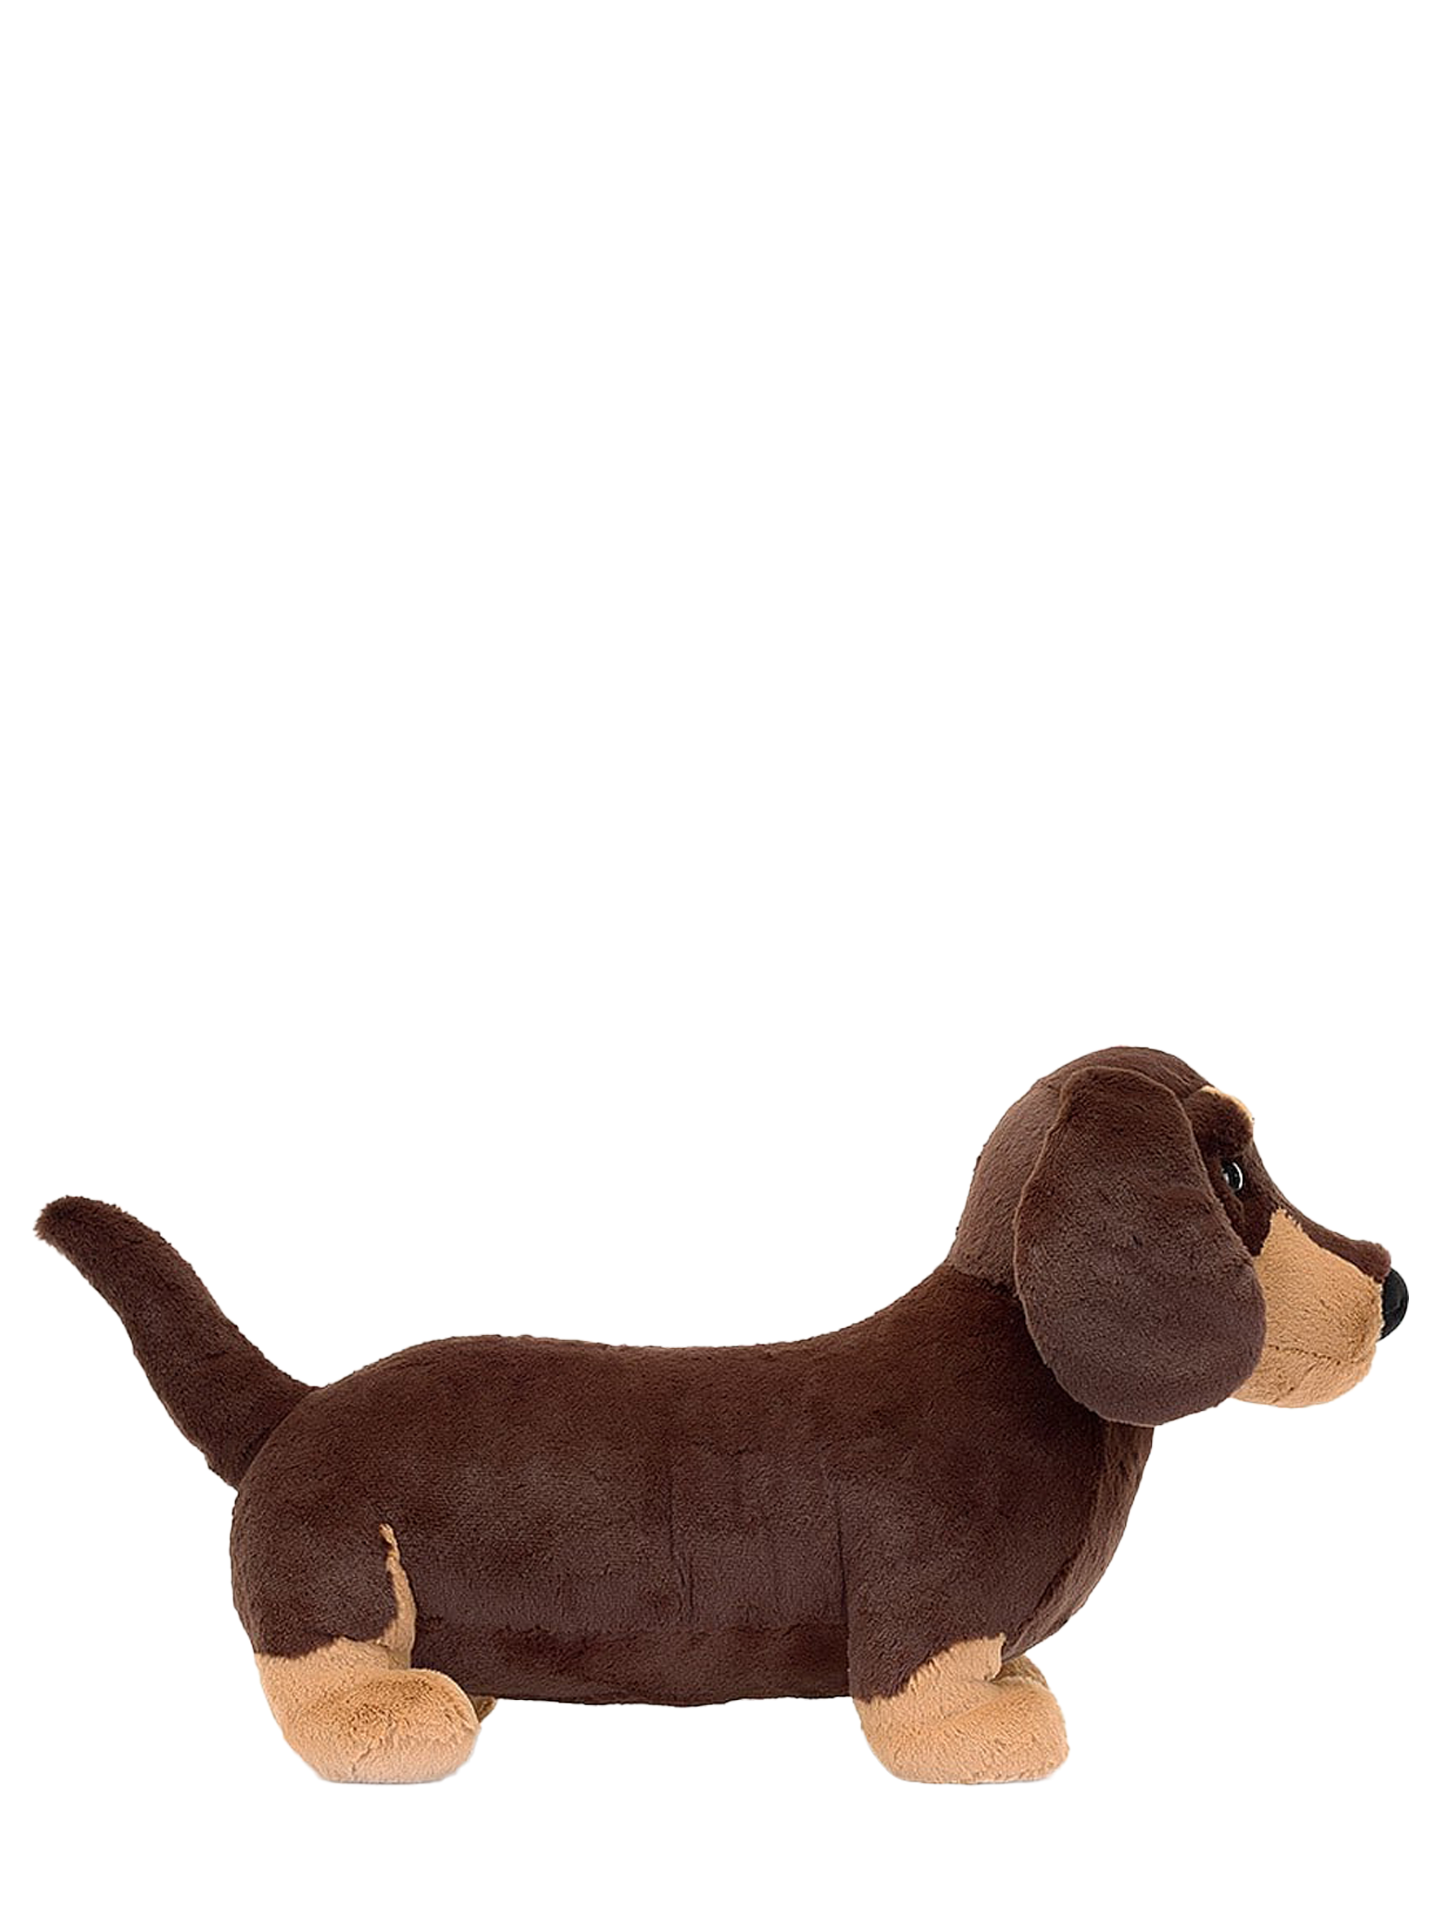 Huge Otto Sausage dog (dachshund), soft toy